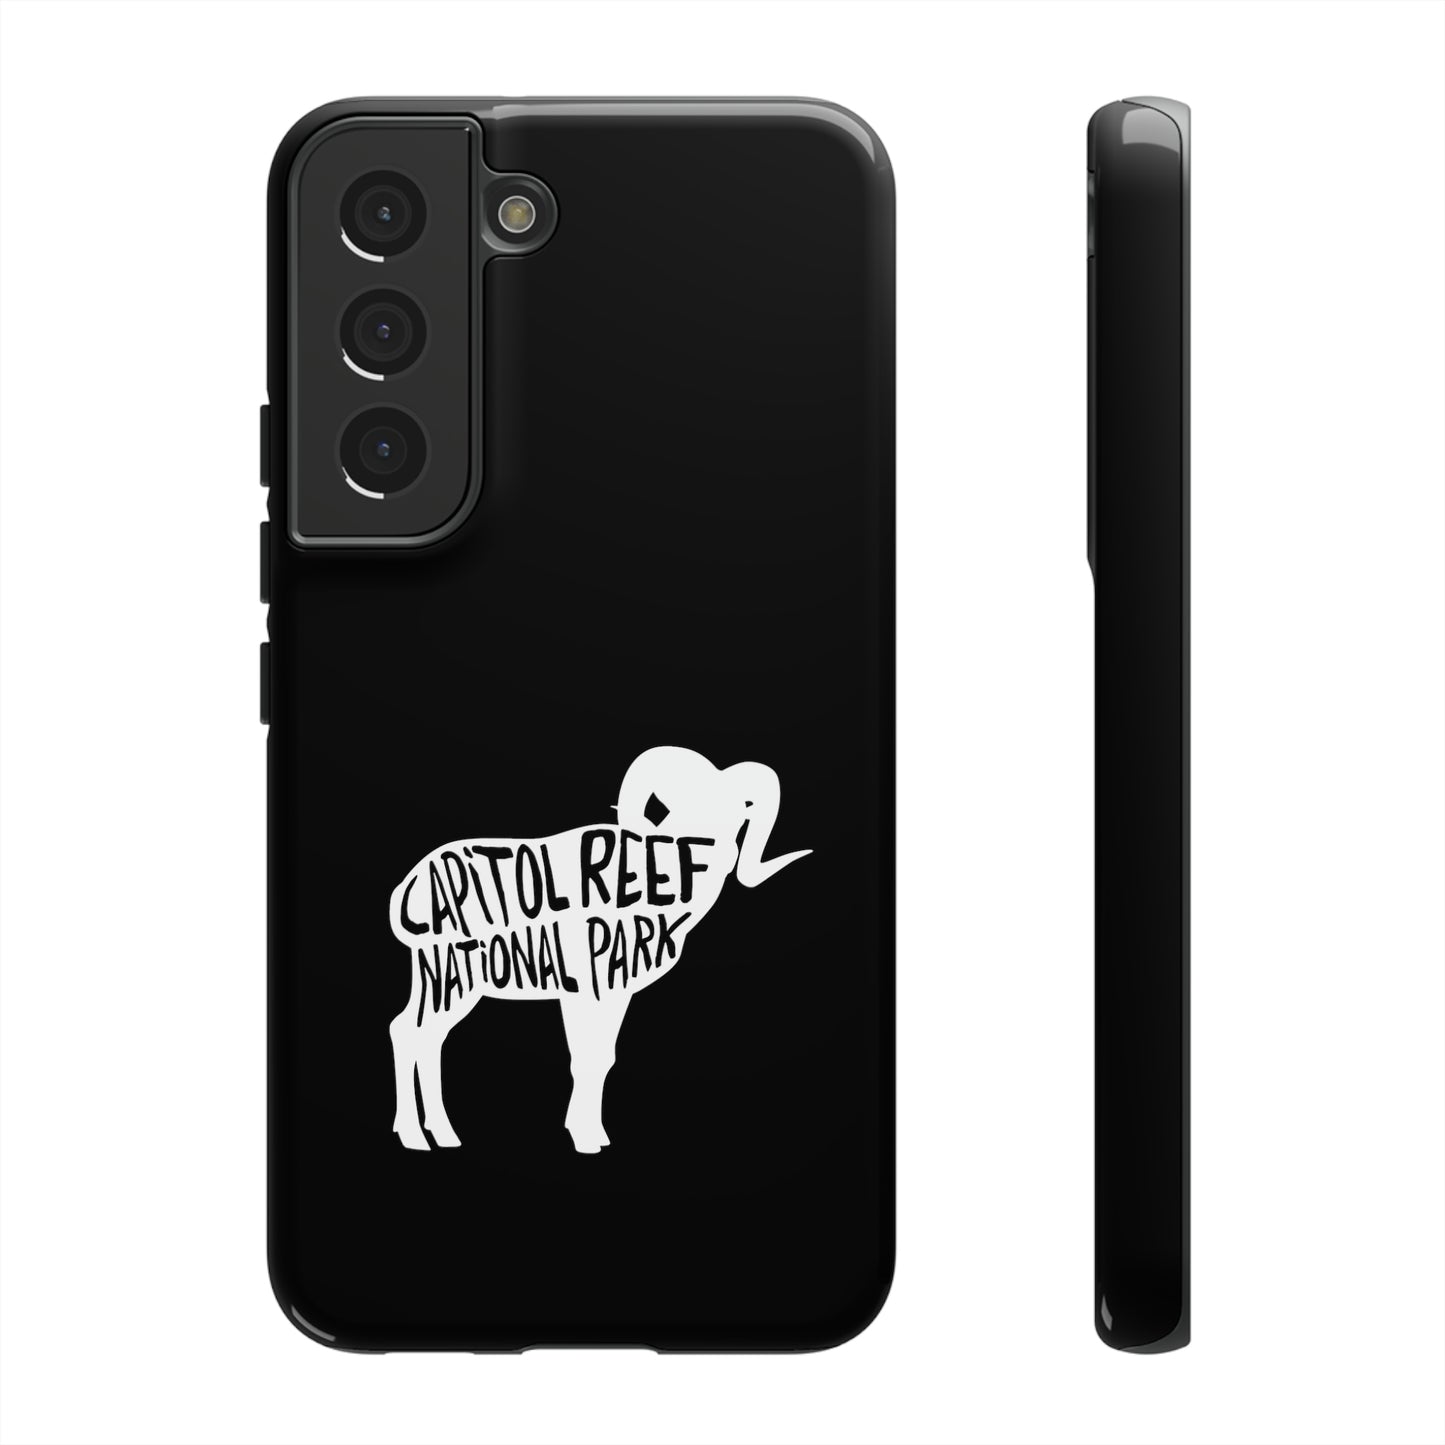 Capitol Reef National Park Phone Case - Bighorn Sheep Design